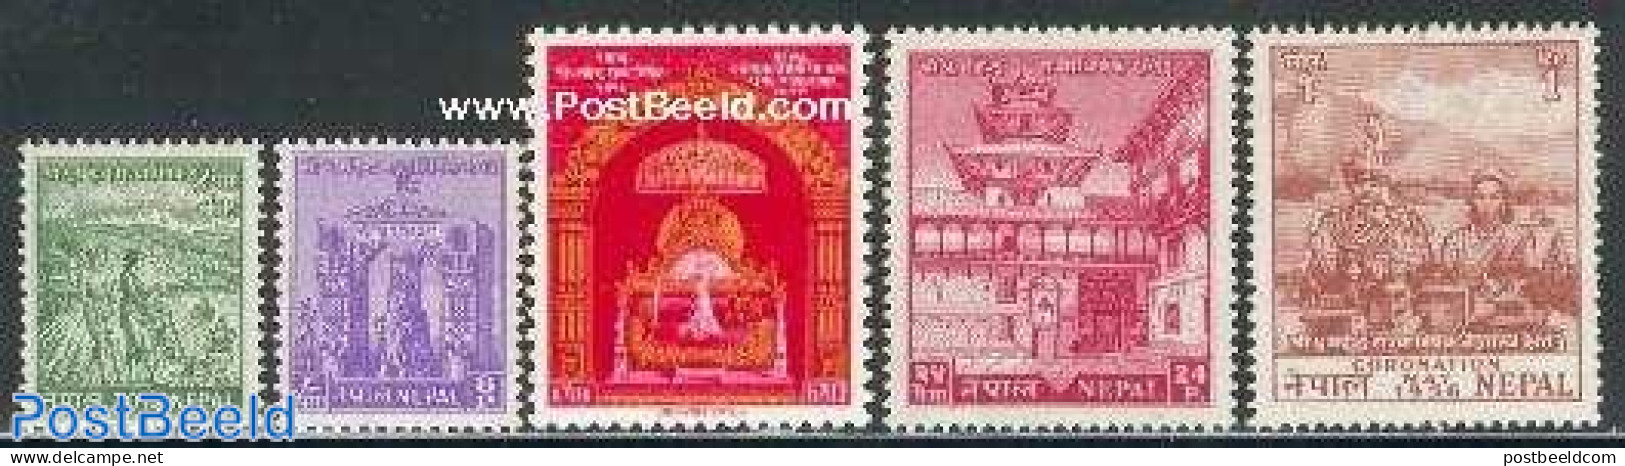 Nepal 1956 Coronation 5v, Unused (hinged), History - Kings & Queens (Royalty) - Königshäuser, Adel